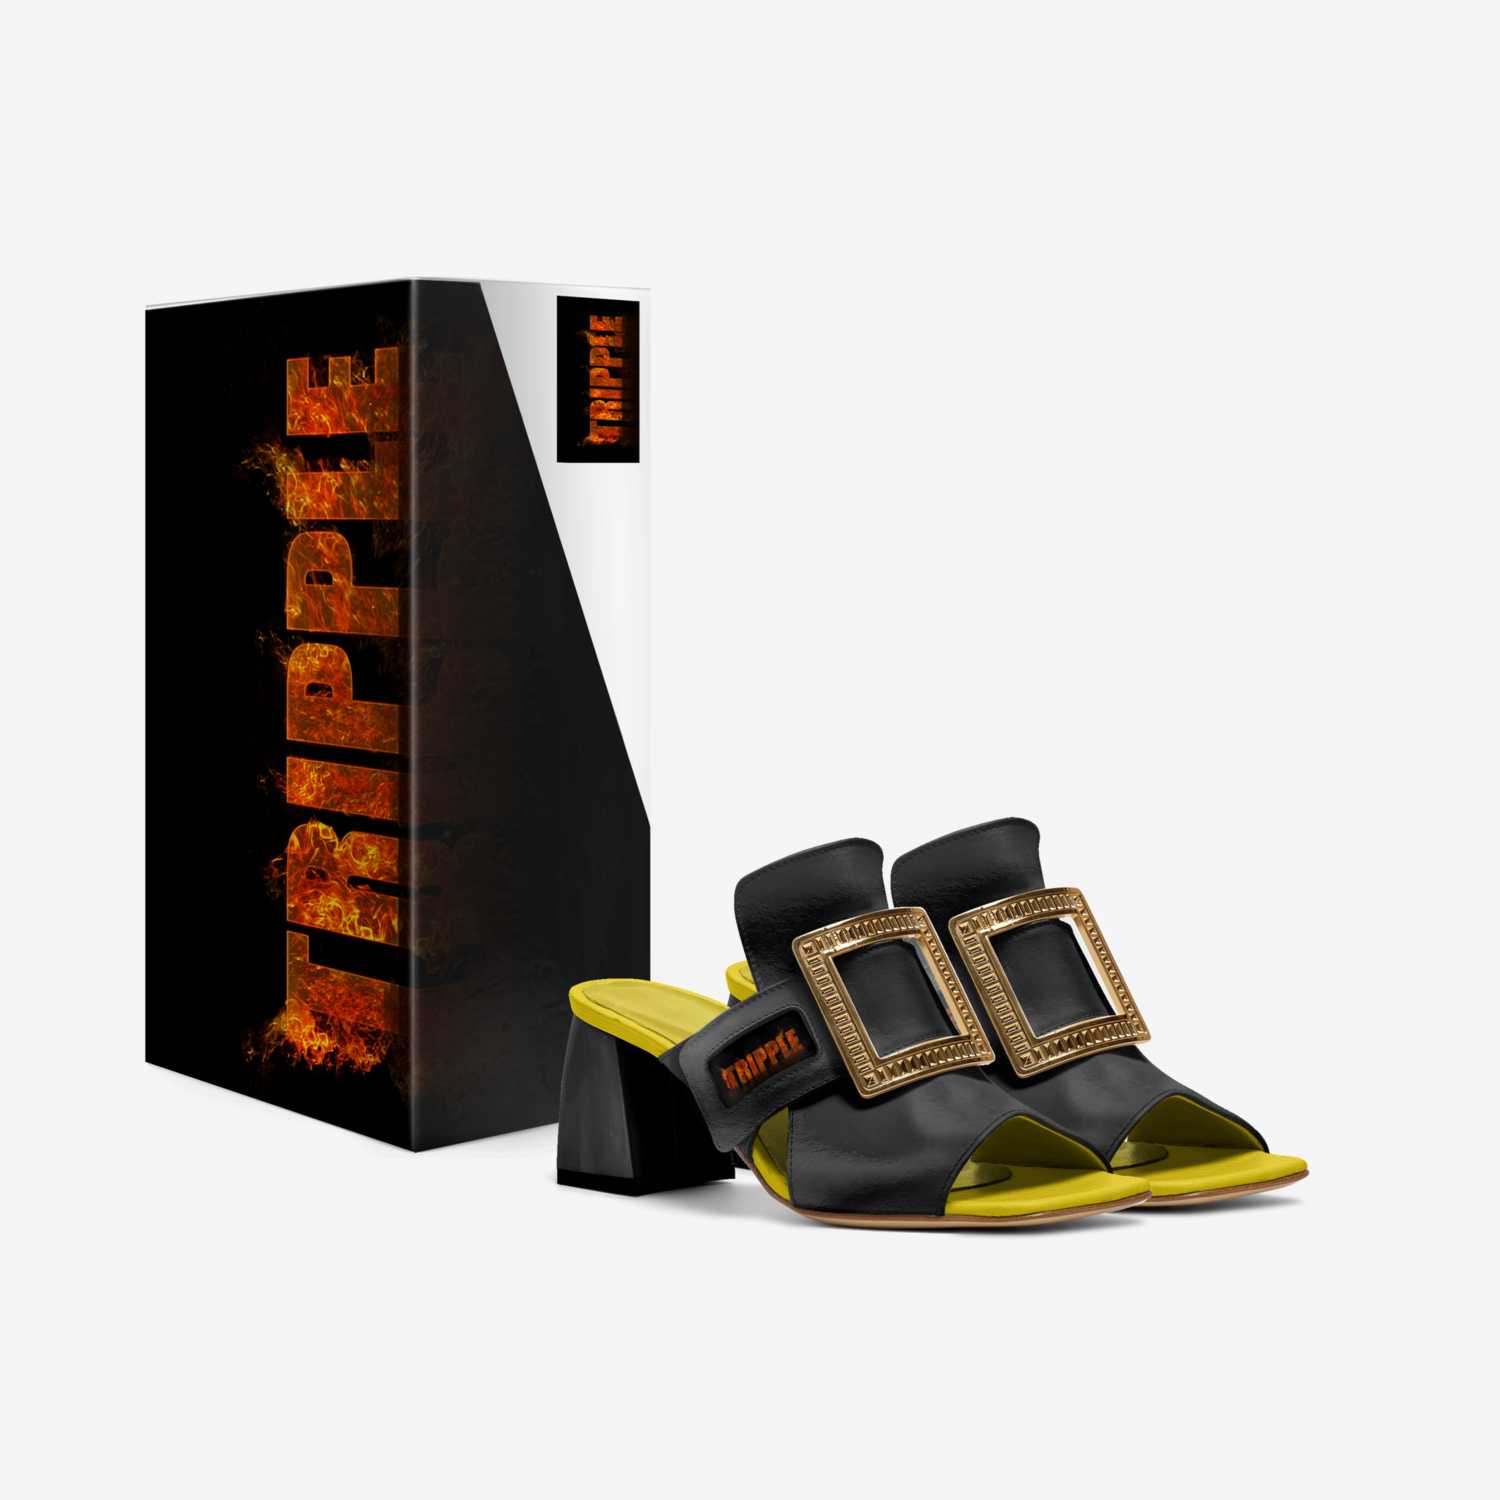 TRIPPLE_LADY SLIDE custom made in Italy shoes by Rachel Ekinde | Box view